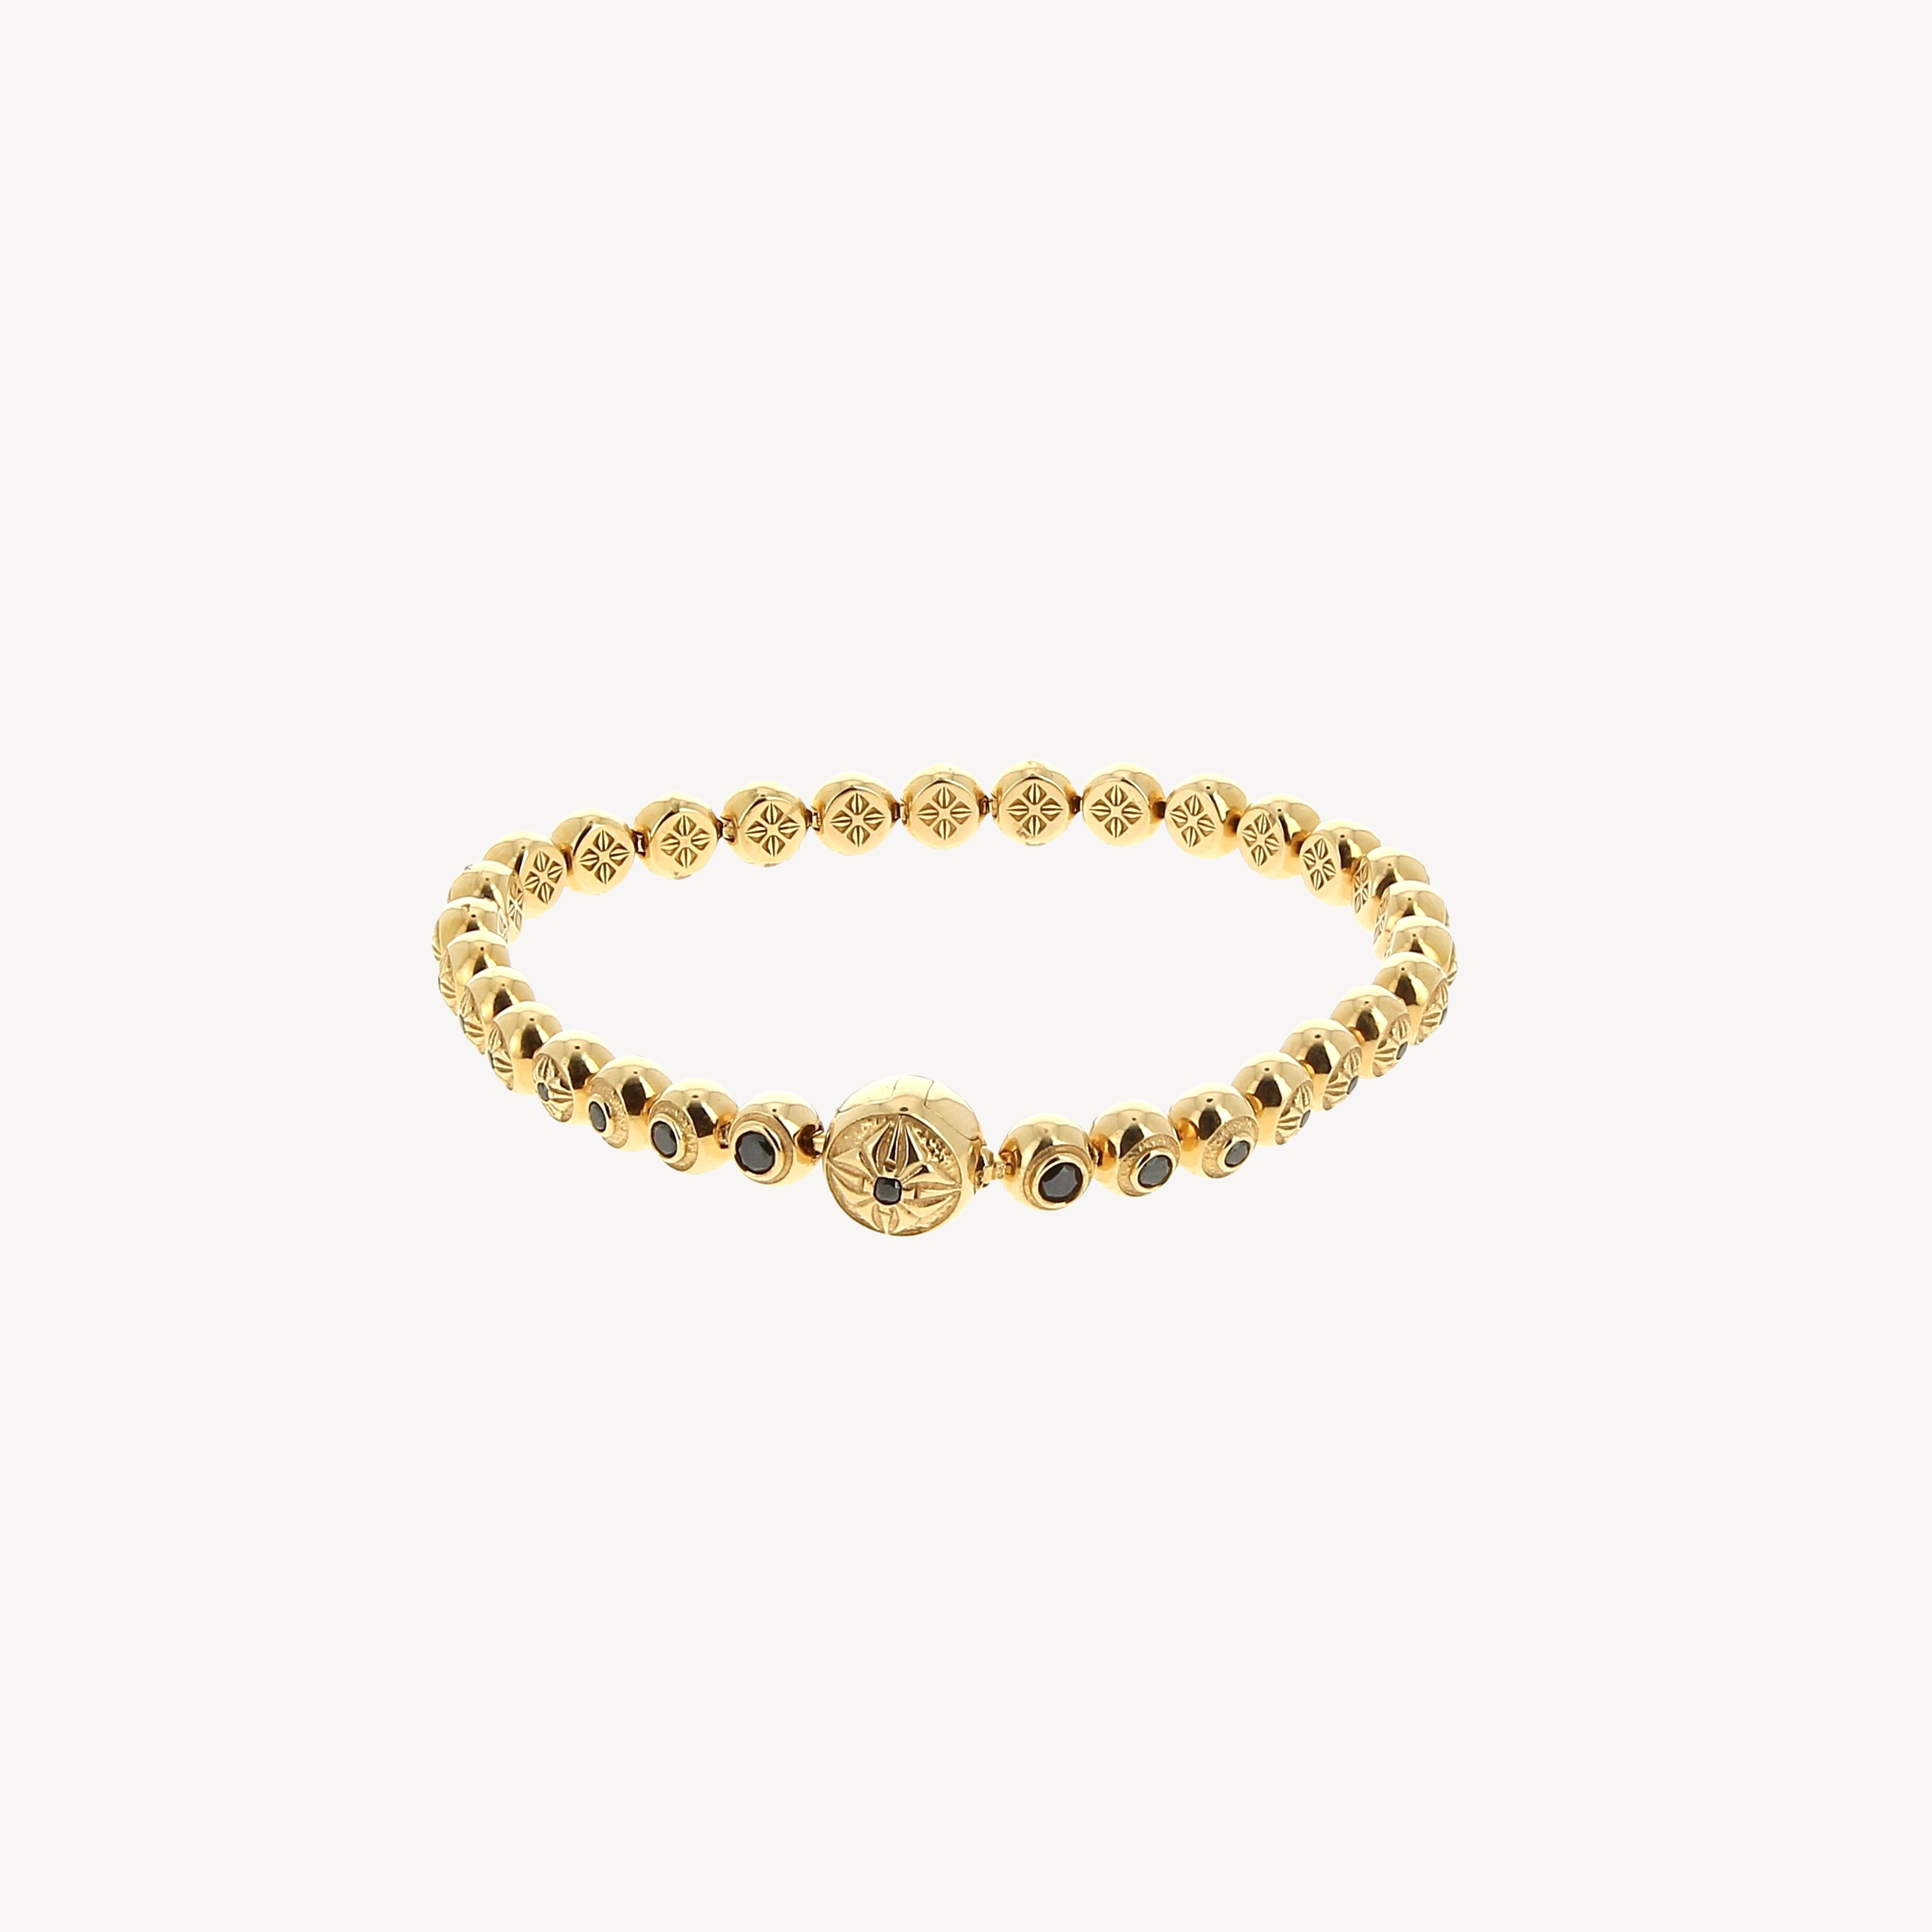 Rose gold and black diamond bracelet